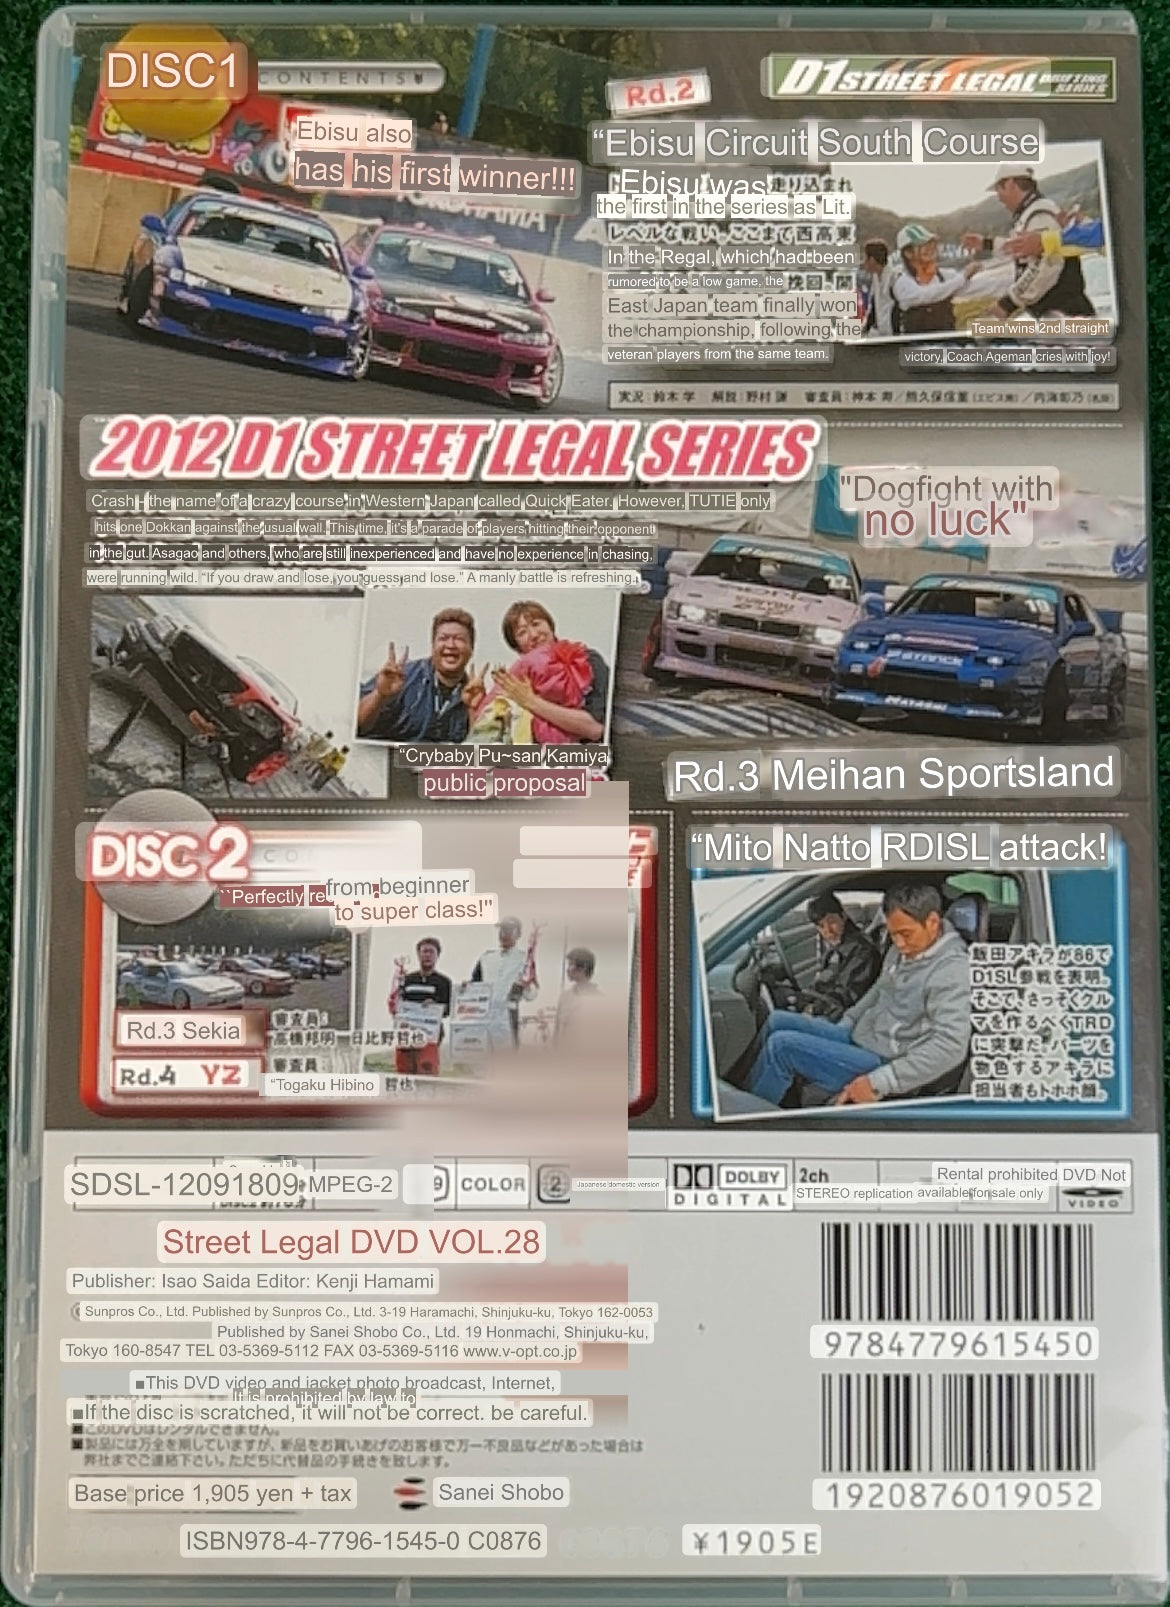 STREET LEGAL DVD - Vol. 28